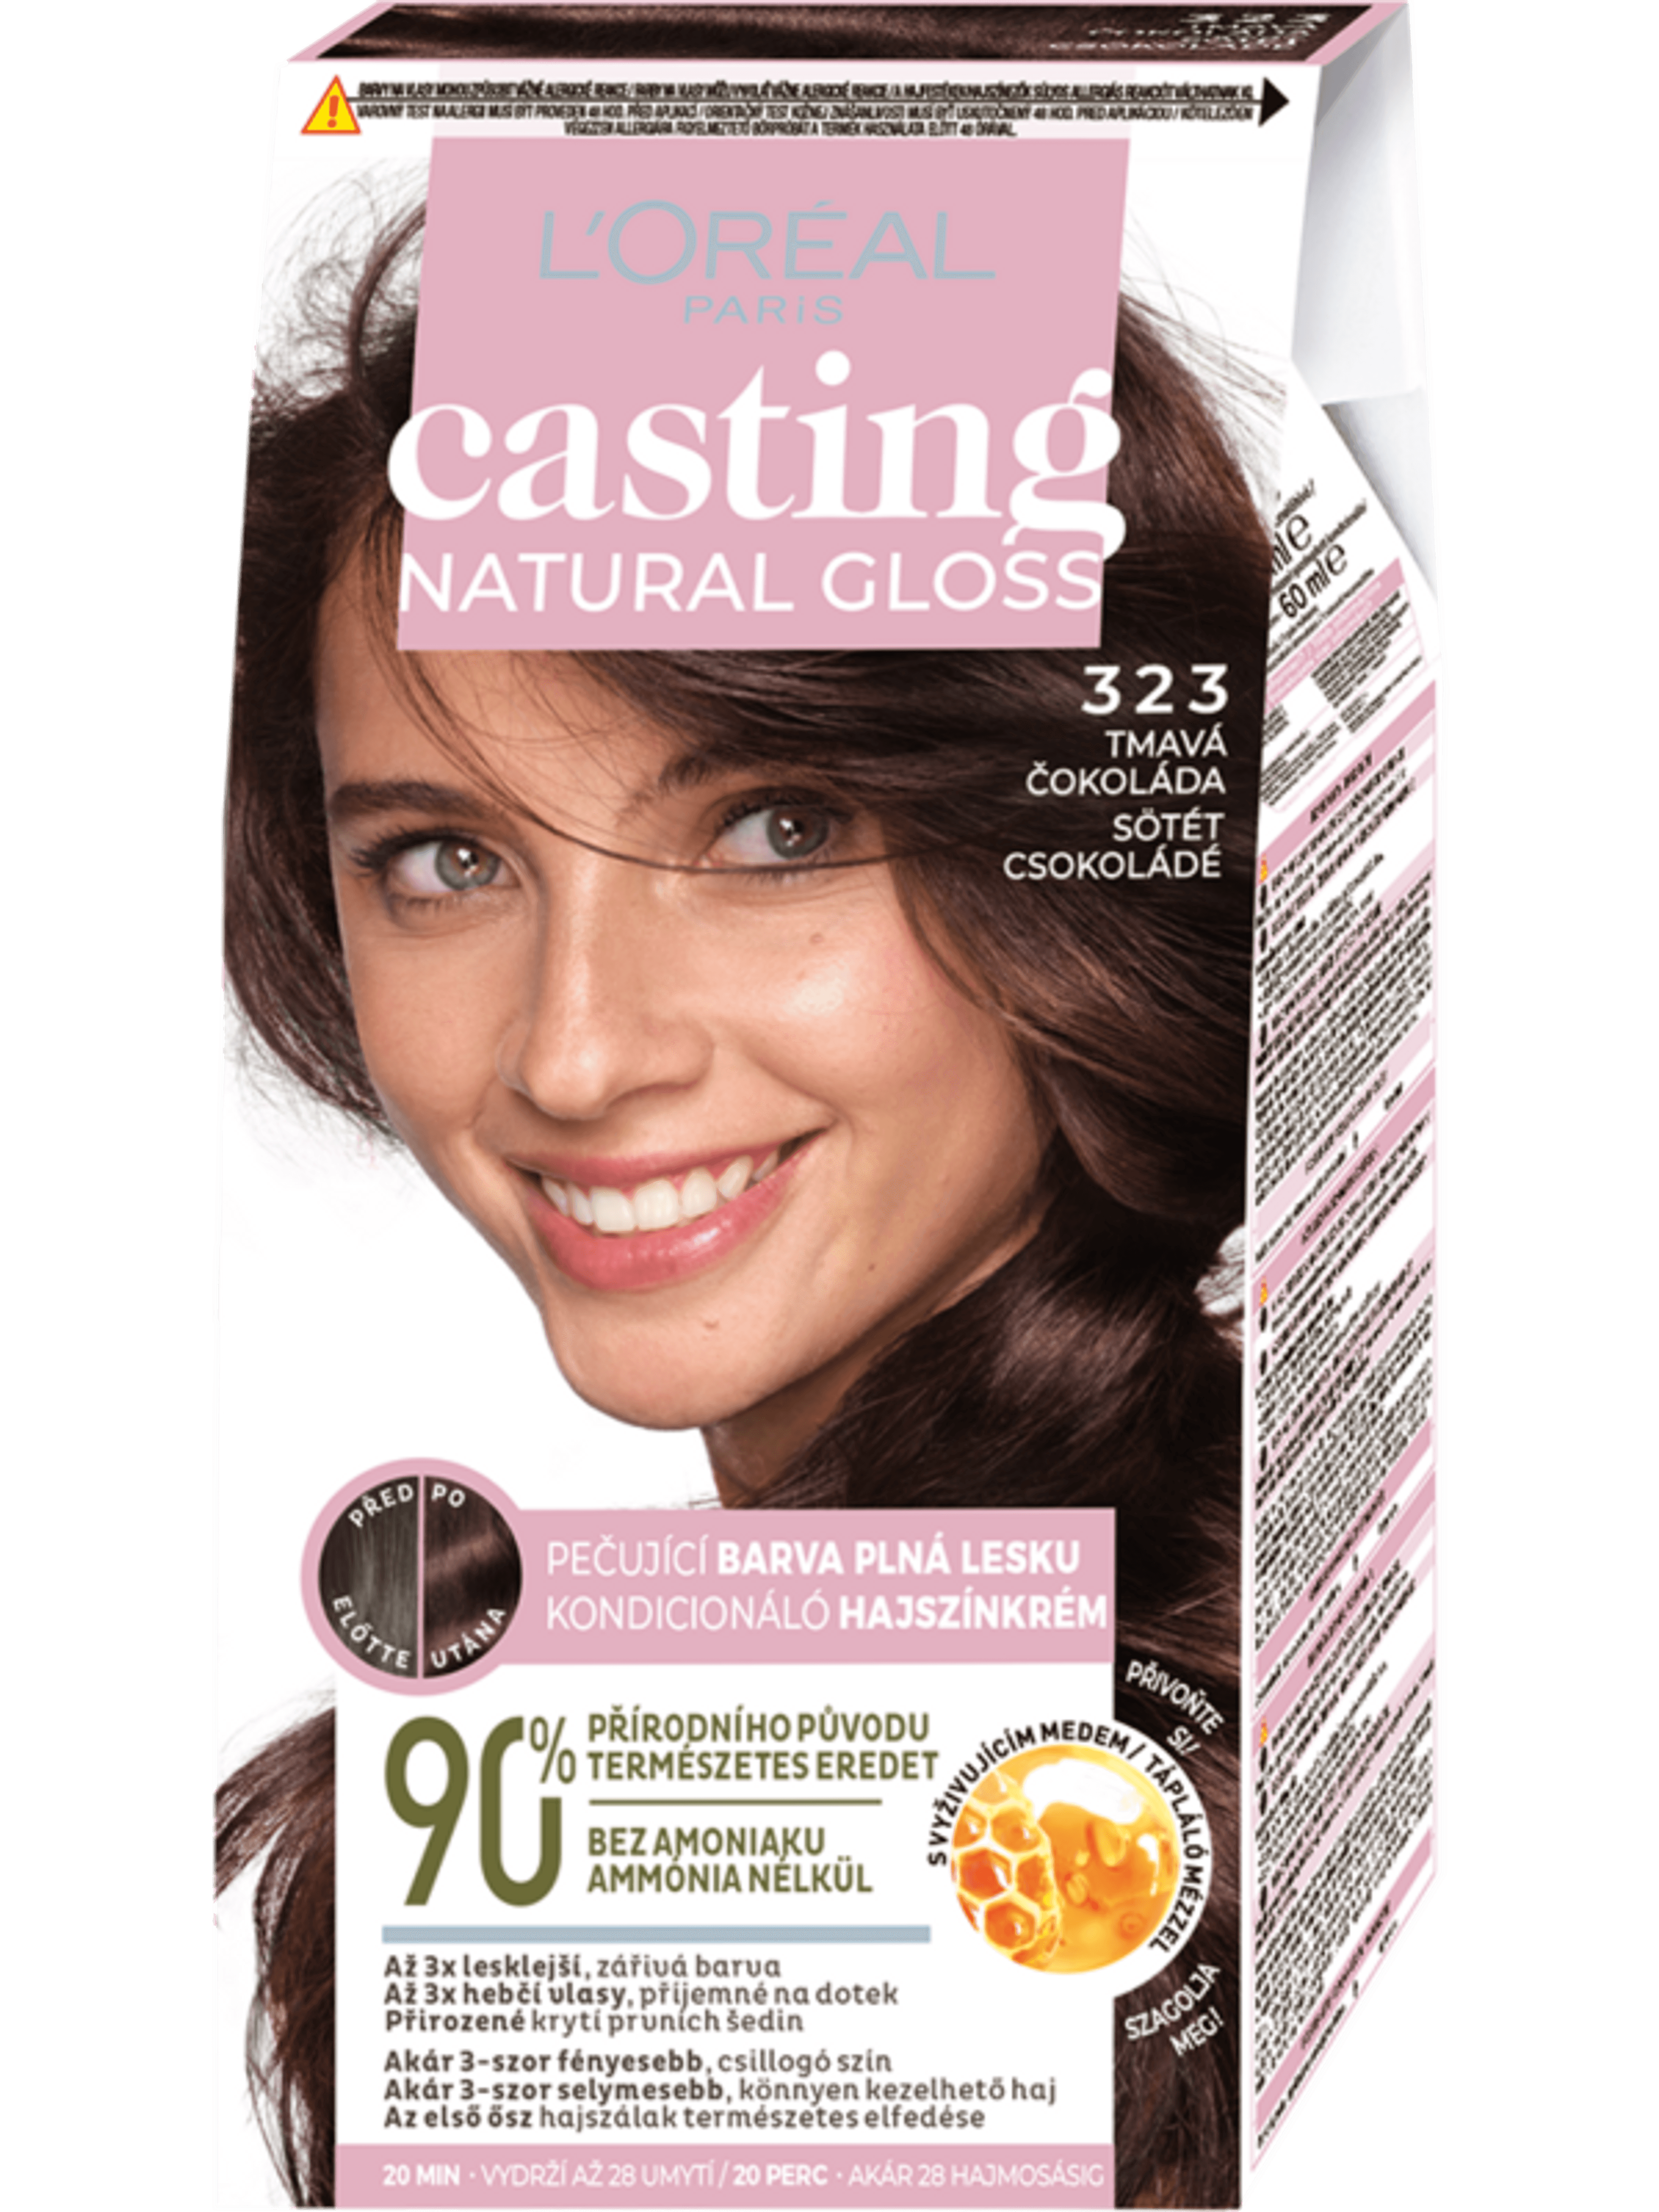 L'Oreal Paris Casting Natural Gloss hajszínező, 323 brown chocolate - 1 db